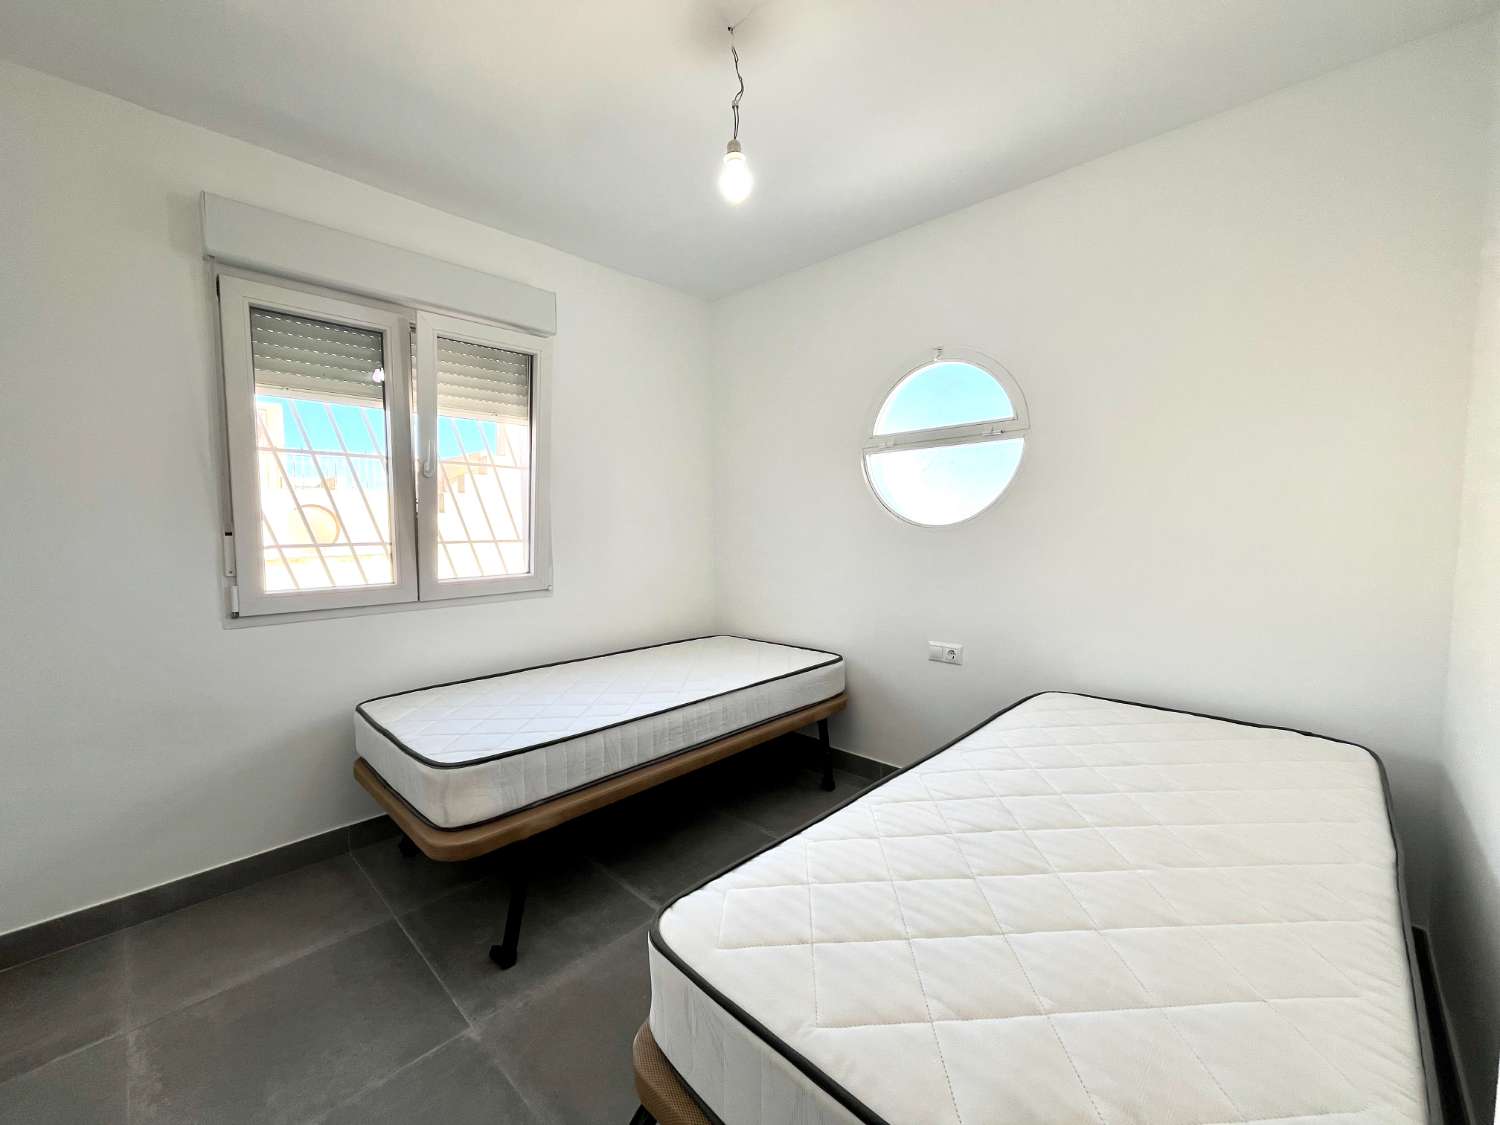 Completely renovated duplex 3 bedrooms, 1 bathroom with solarium